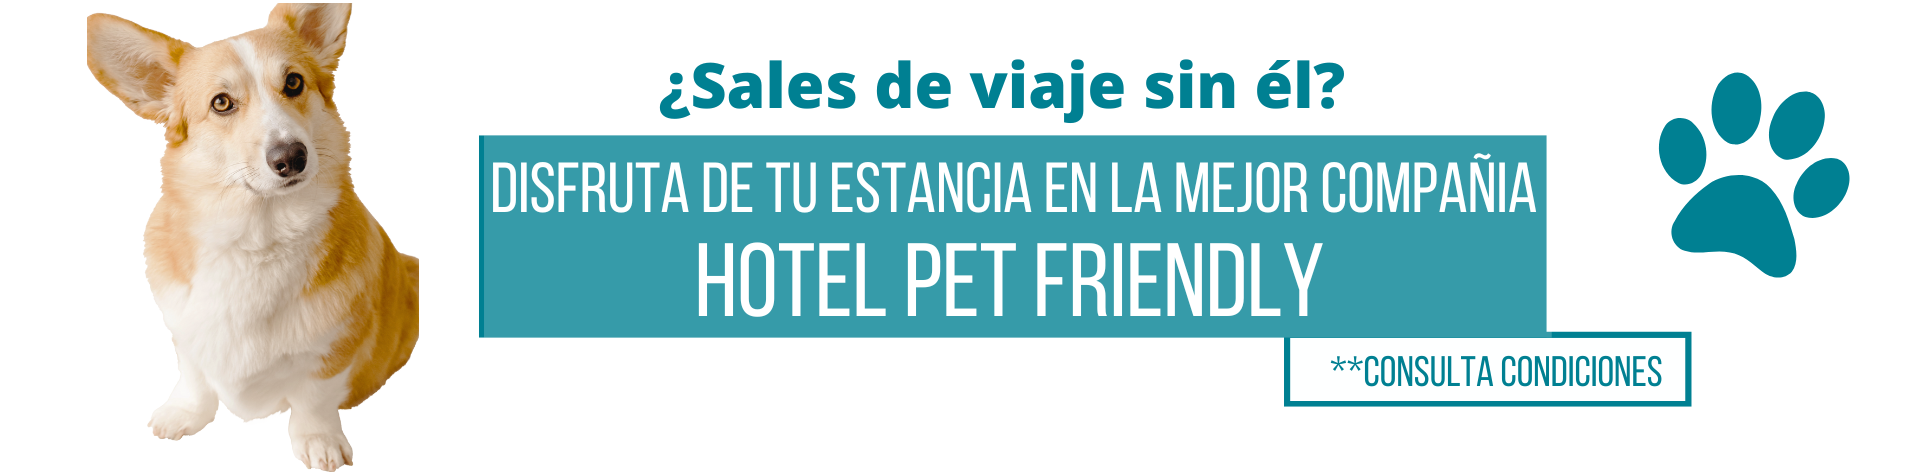 Hotel pet friendly 1920x475